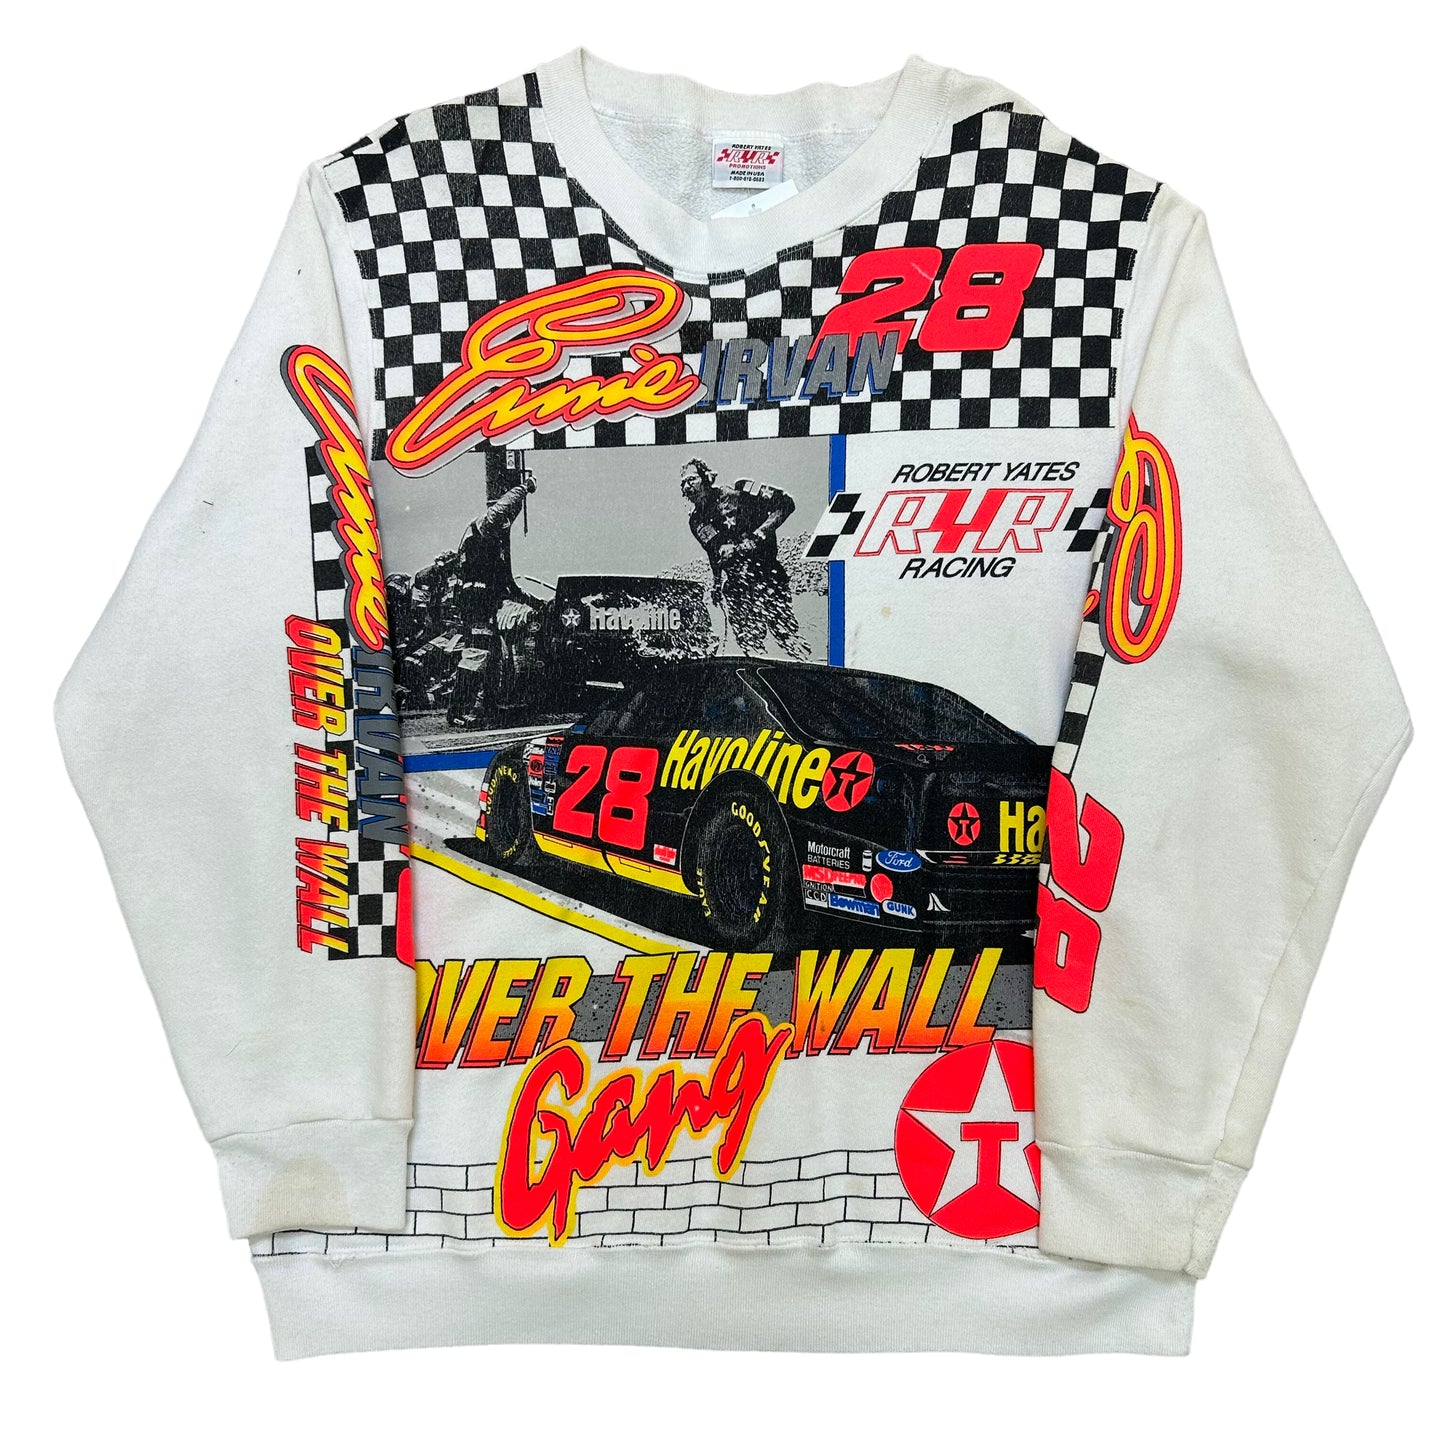 Vintage 1990s Ernie Irvan “Over The Wall Gang” All Over Print Crewneck Sweatshirt - Size Medium (Fits Large)